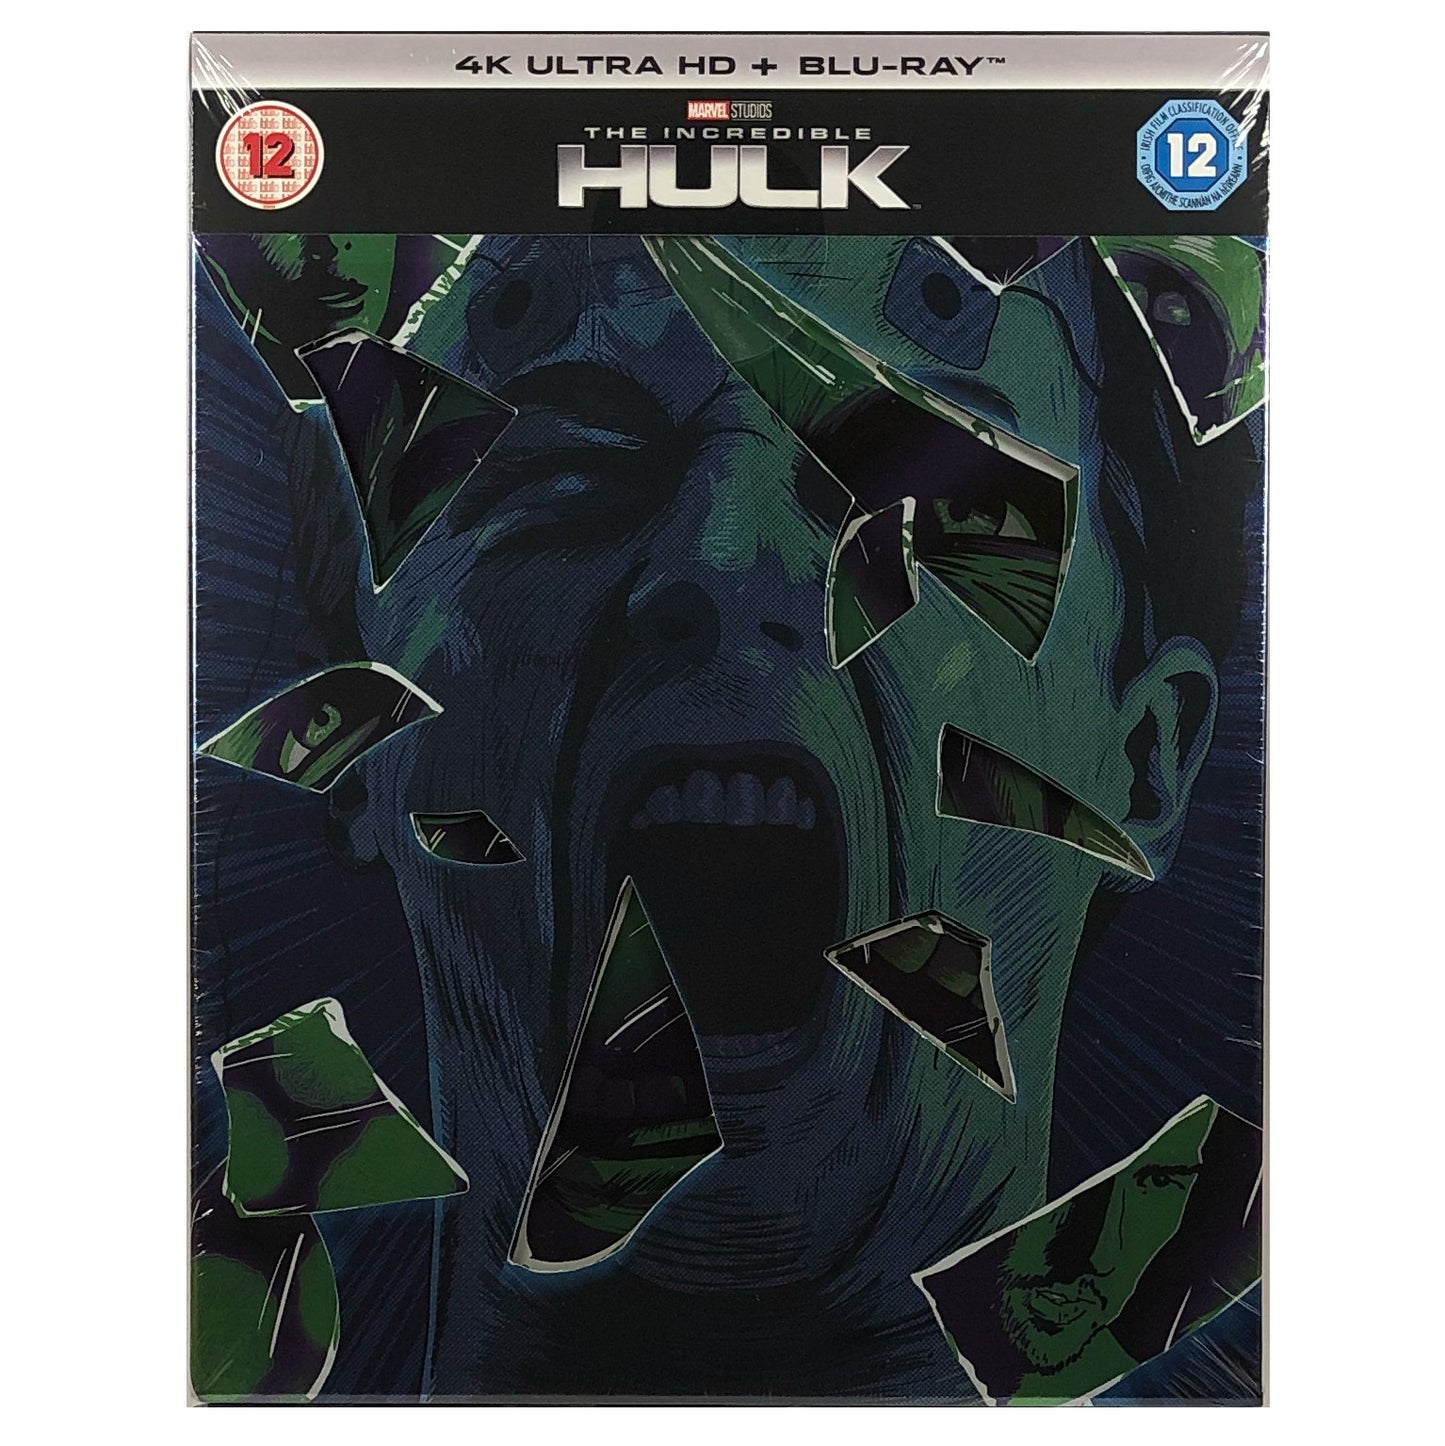 The Incredible Hulk (2008) 4K Steelbook